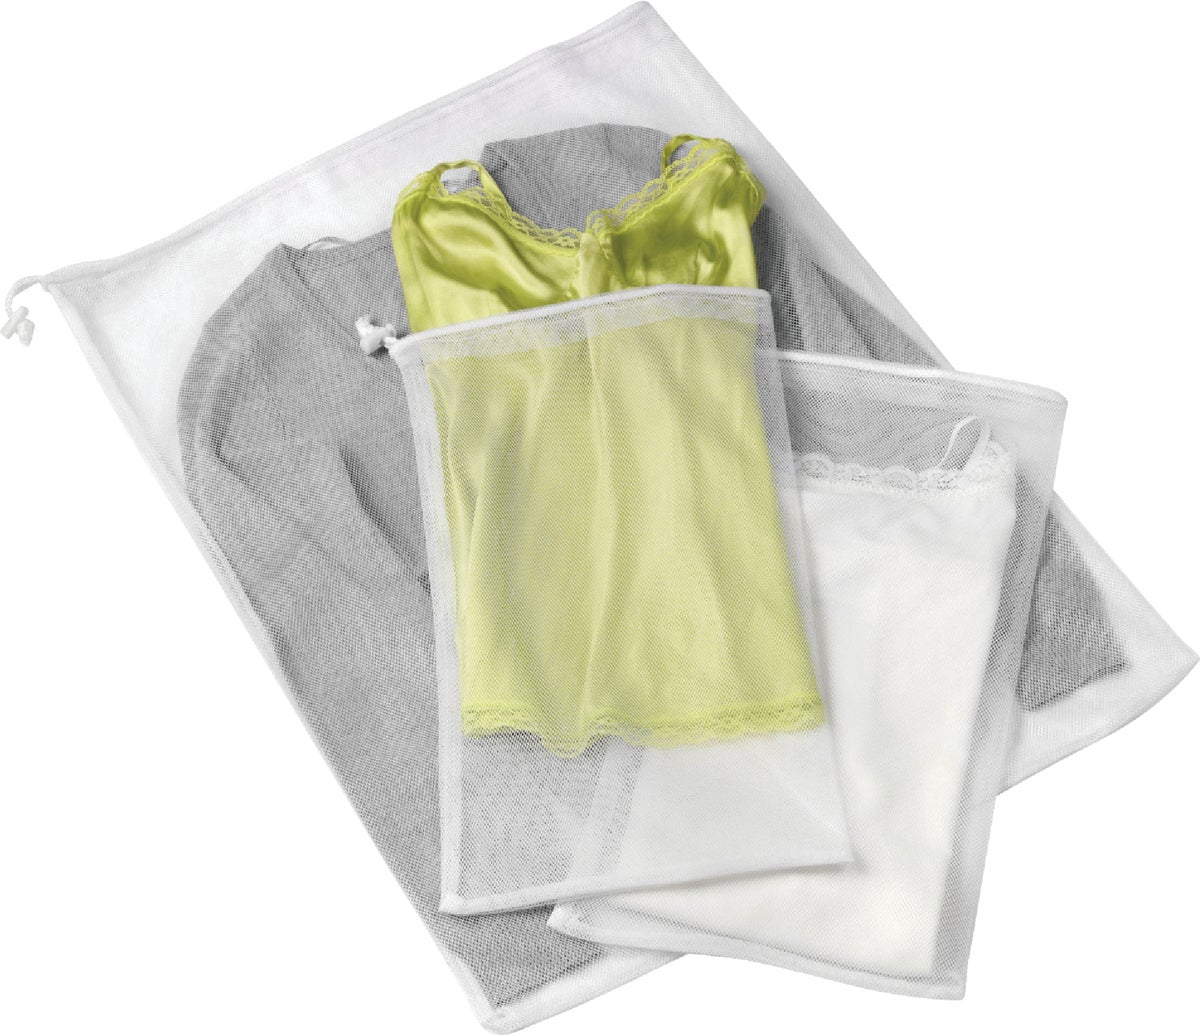 Whitmor Cotton Laundry Bag Natural 